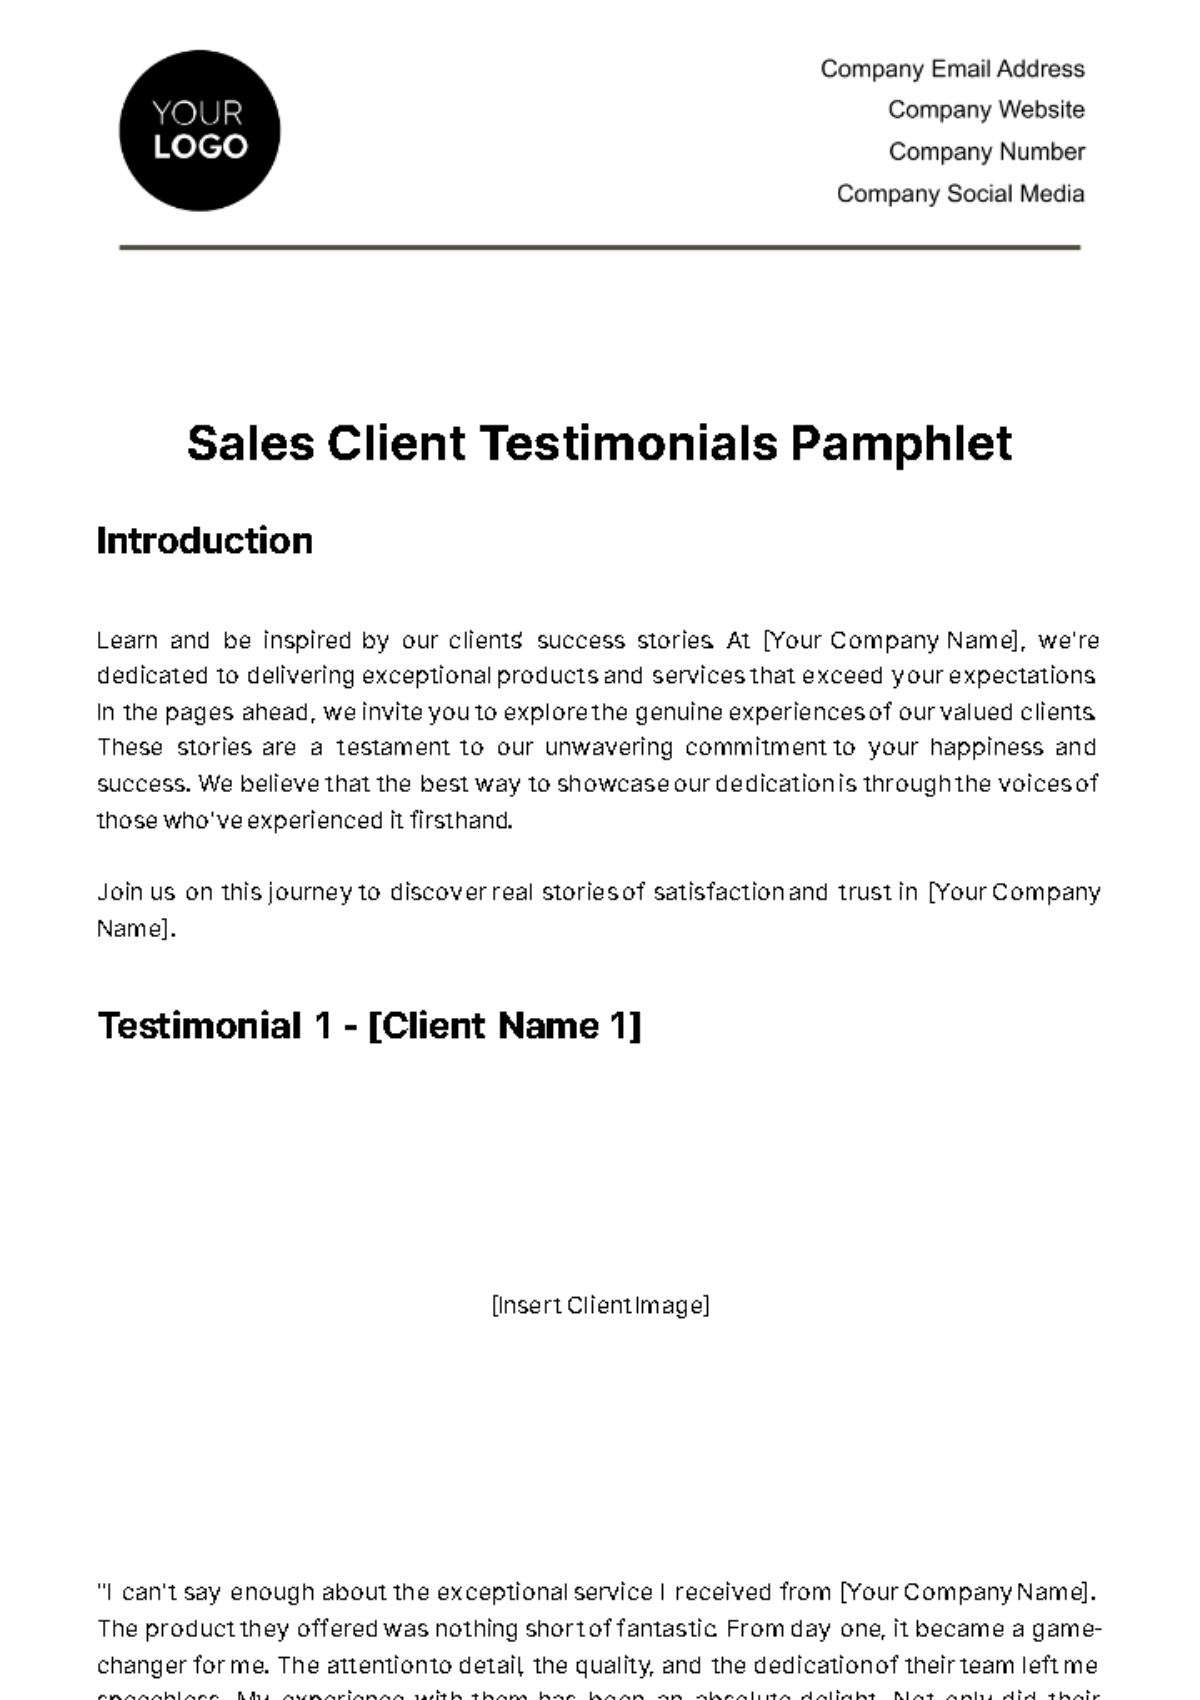 Free Sales Client Testimonials Pamphlet Template